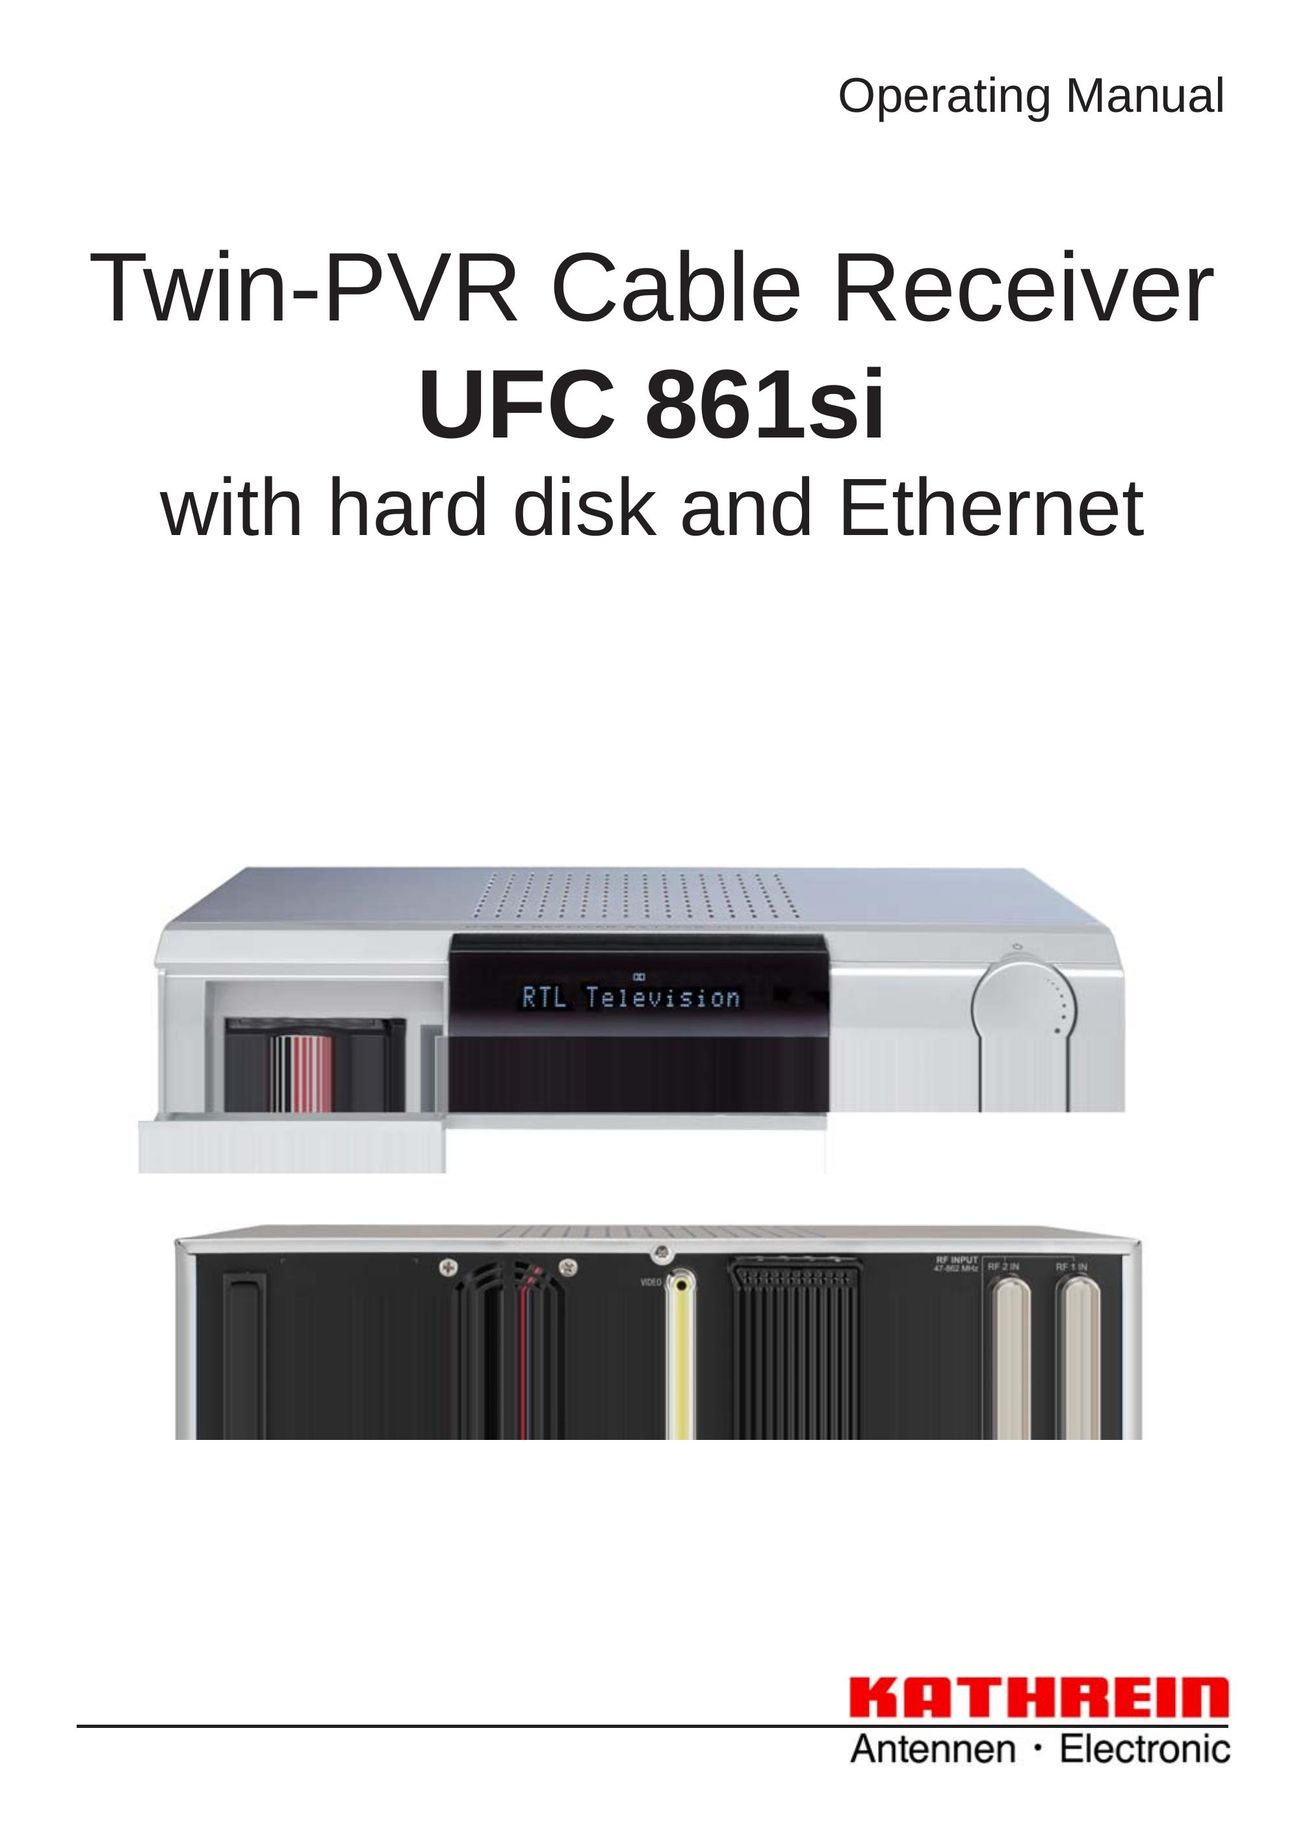 Kathrein UFC 861si Satellite TV System User Manual